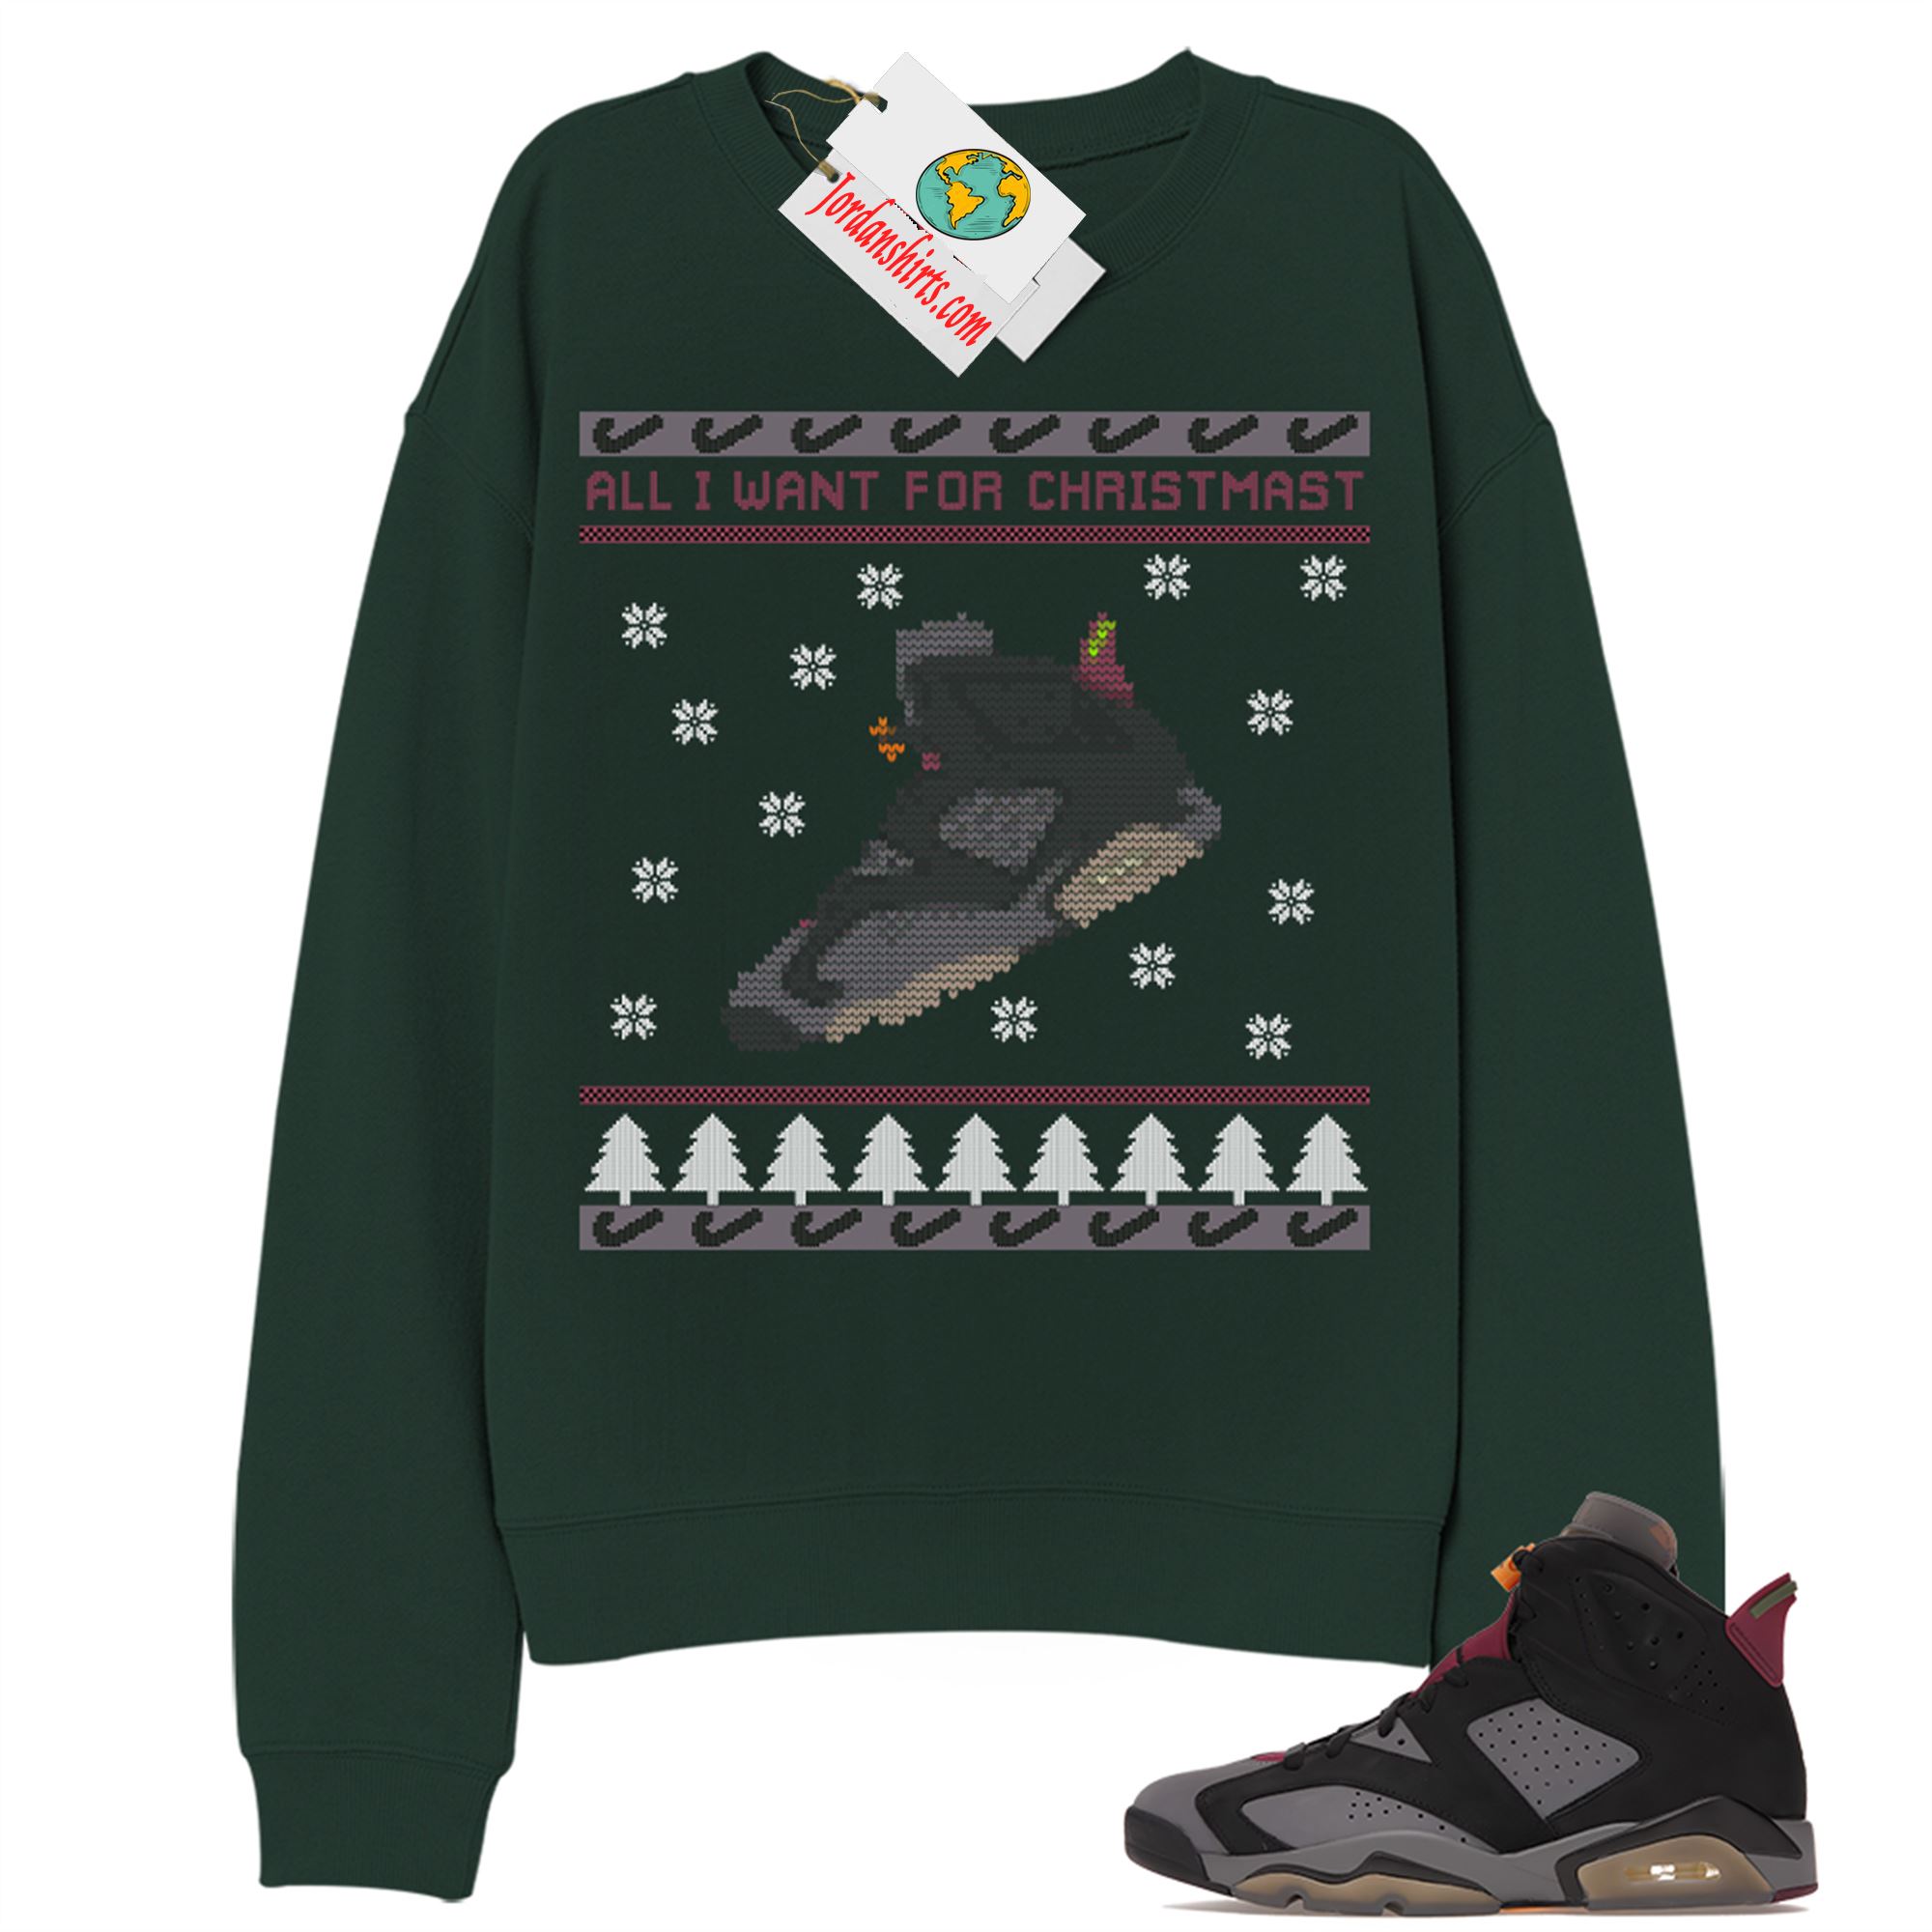 Jordan 6 Sweatshirt, Sneaker Ugly Christmas Shirt Green Sweatshirt Air Jordan 6 Bordeaux 6s Plus Size Up To 5xl